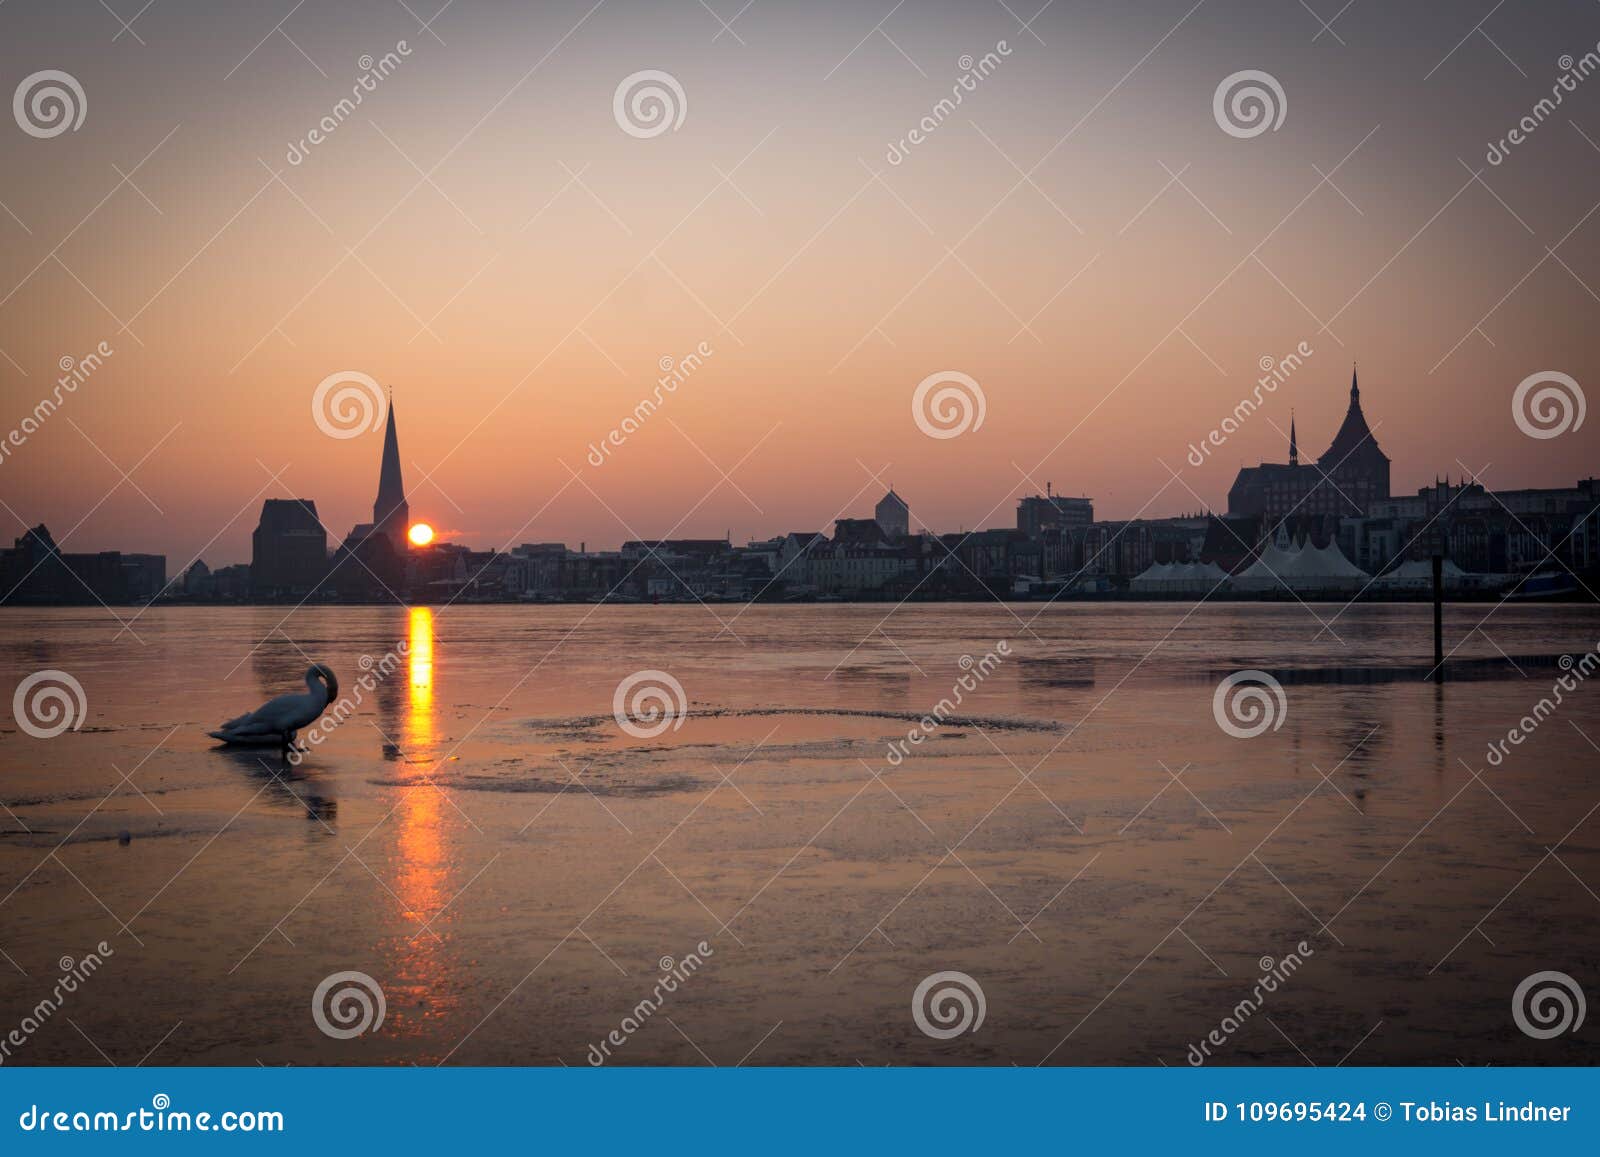 Skyline of Rostock at Sunrise Stock Photo - Image of winter, sunset